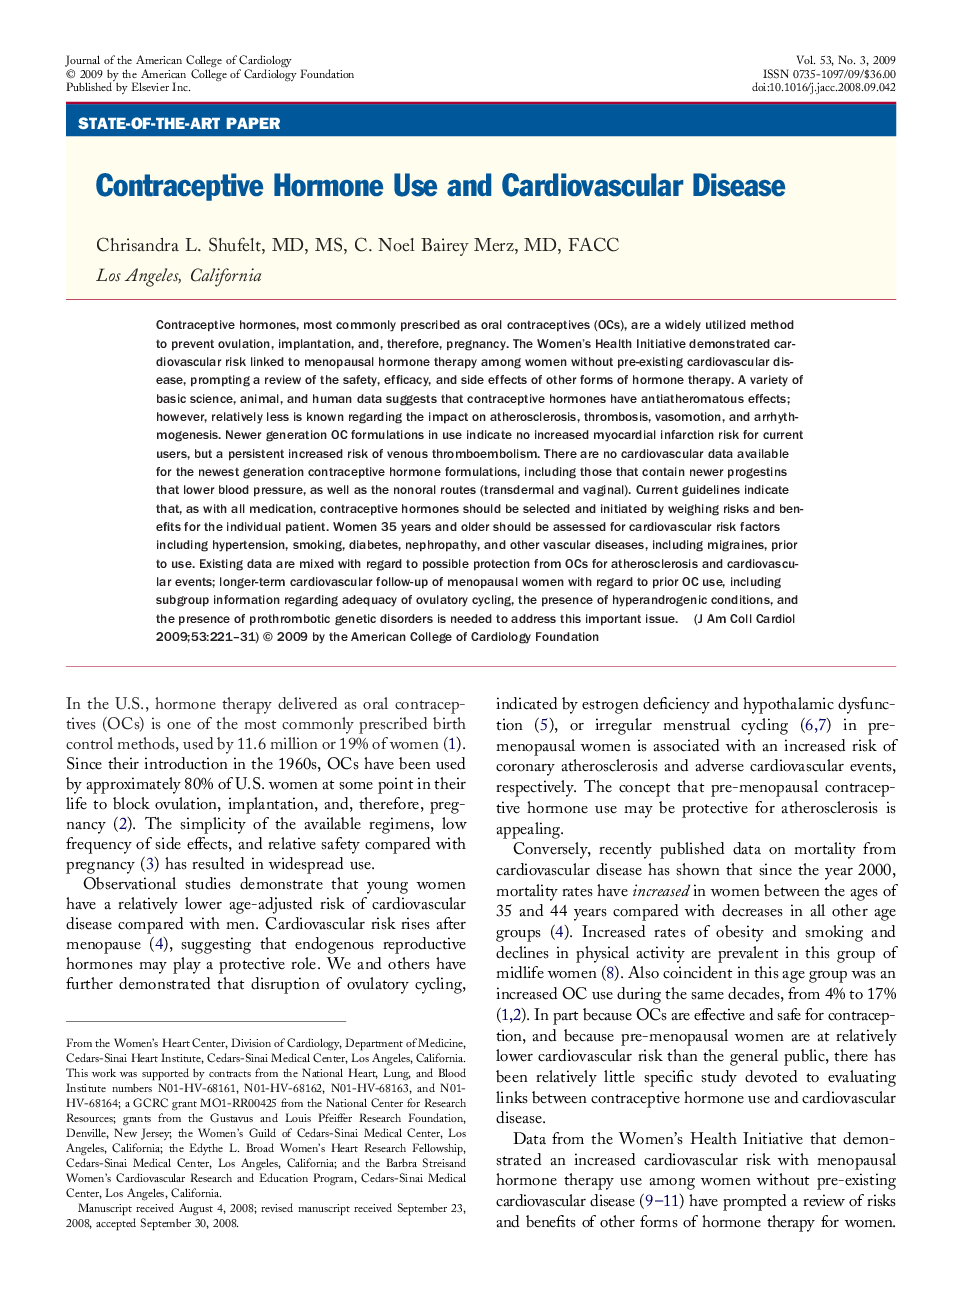 Contraceptive Hormone Use and Cardiovascular Disease 